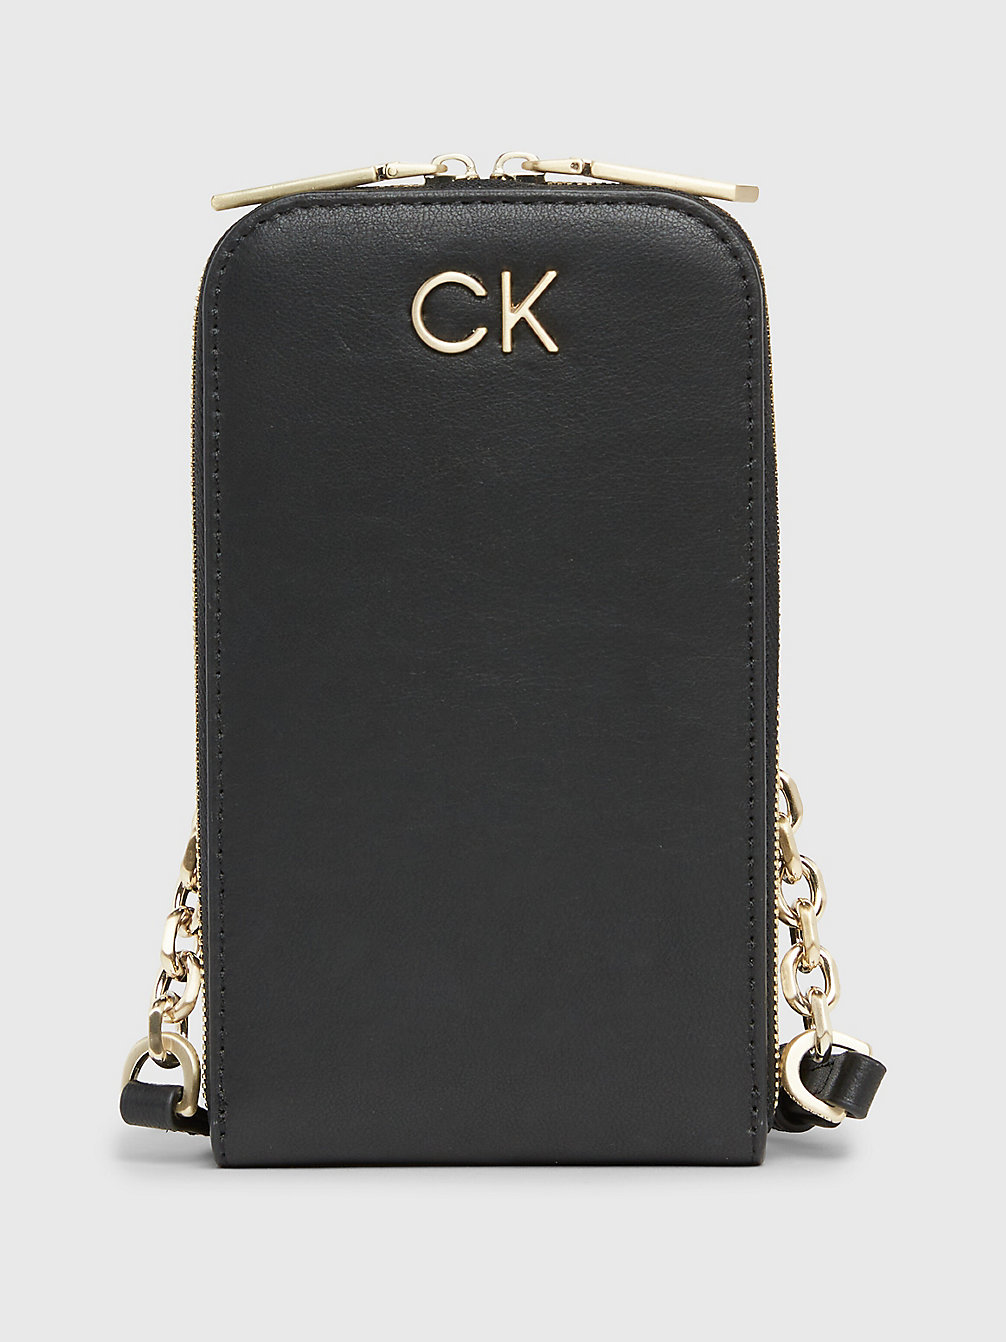 CK BLACK Crossbody Phone Bag undefined women Calvin Klein